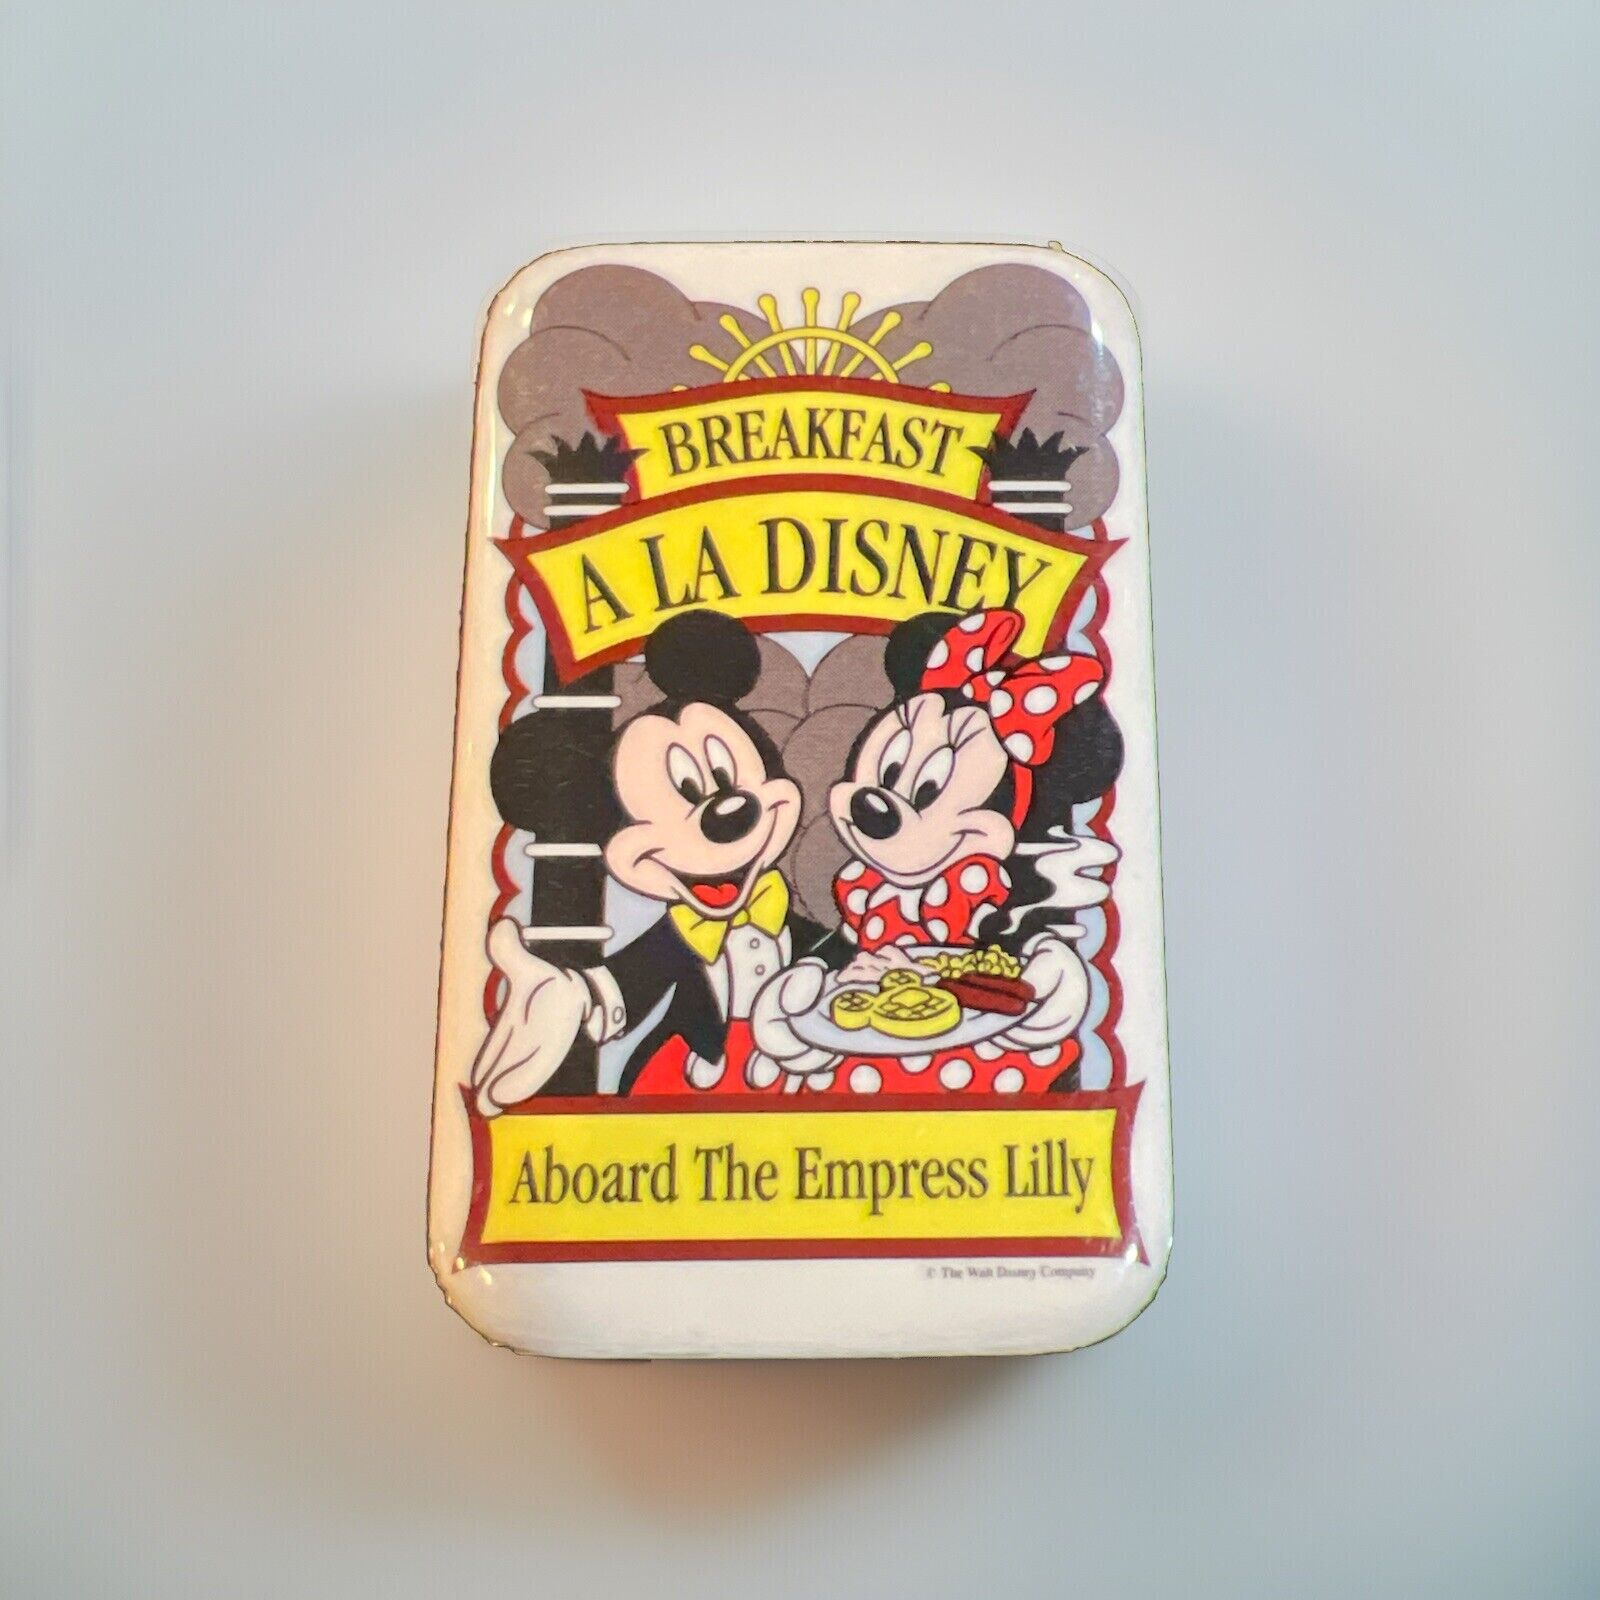 Walt Disney World Breakfast Ala Disney Aboard the Empress Lily Pin Back Button